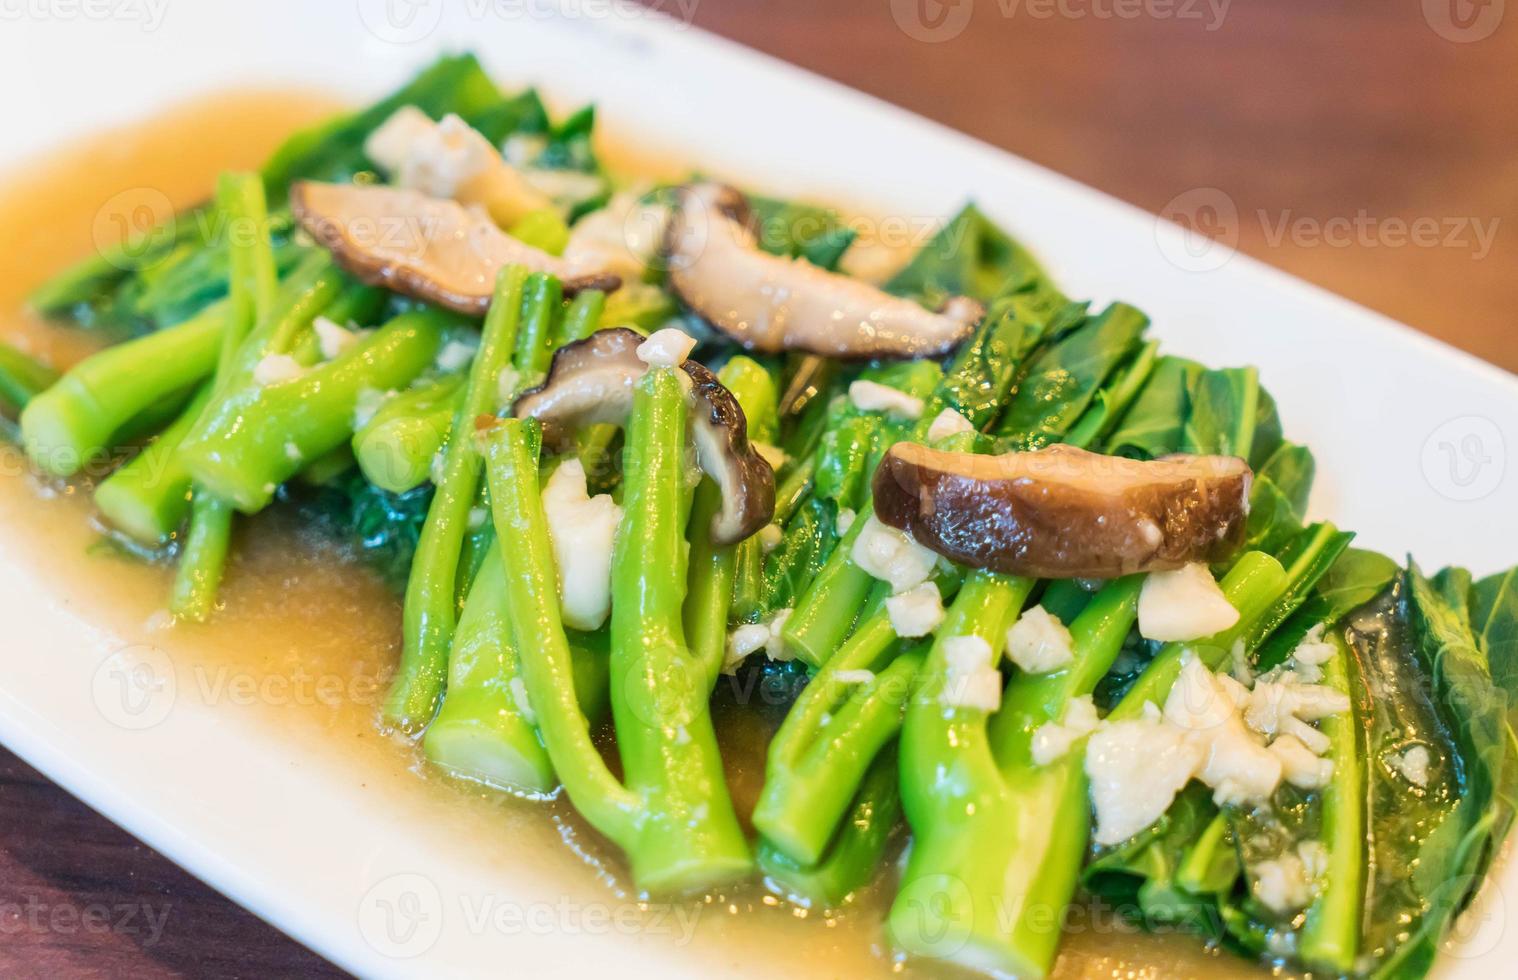 chou chinois sauté aux champignons shiitake - cuisine chinoise photo